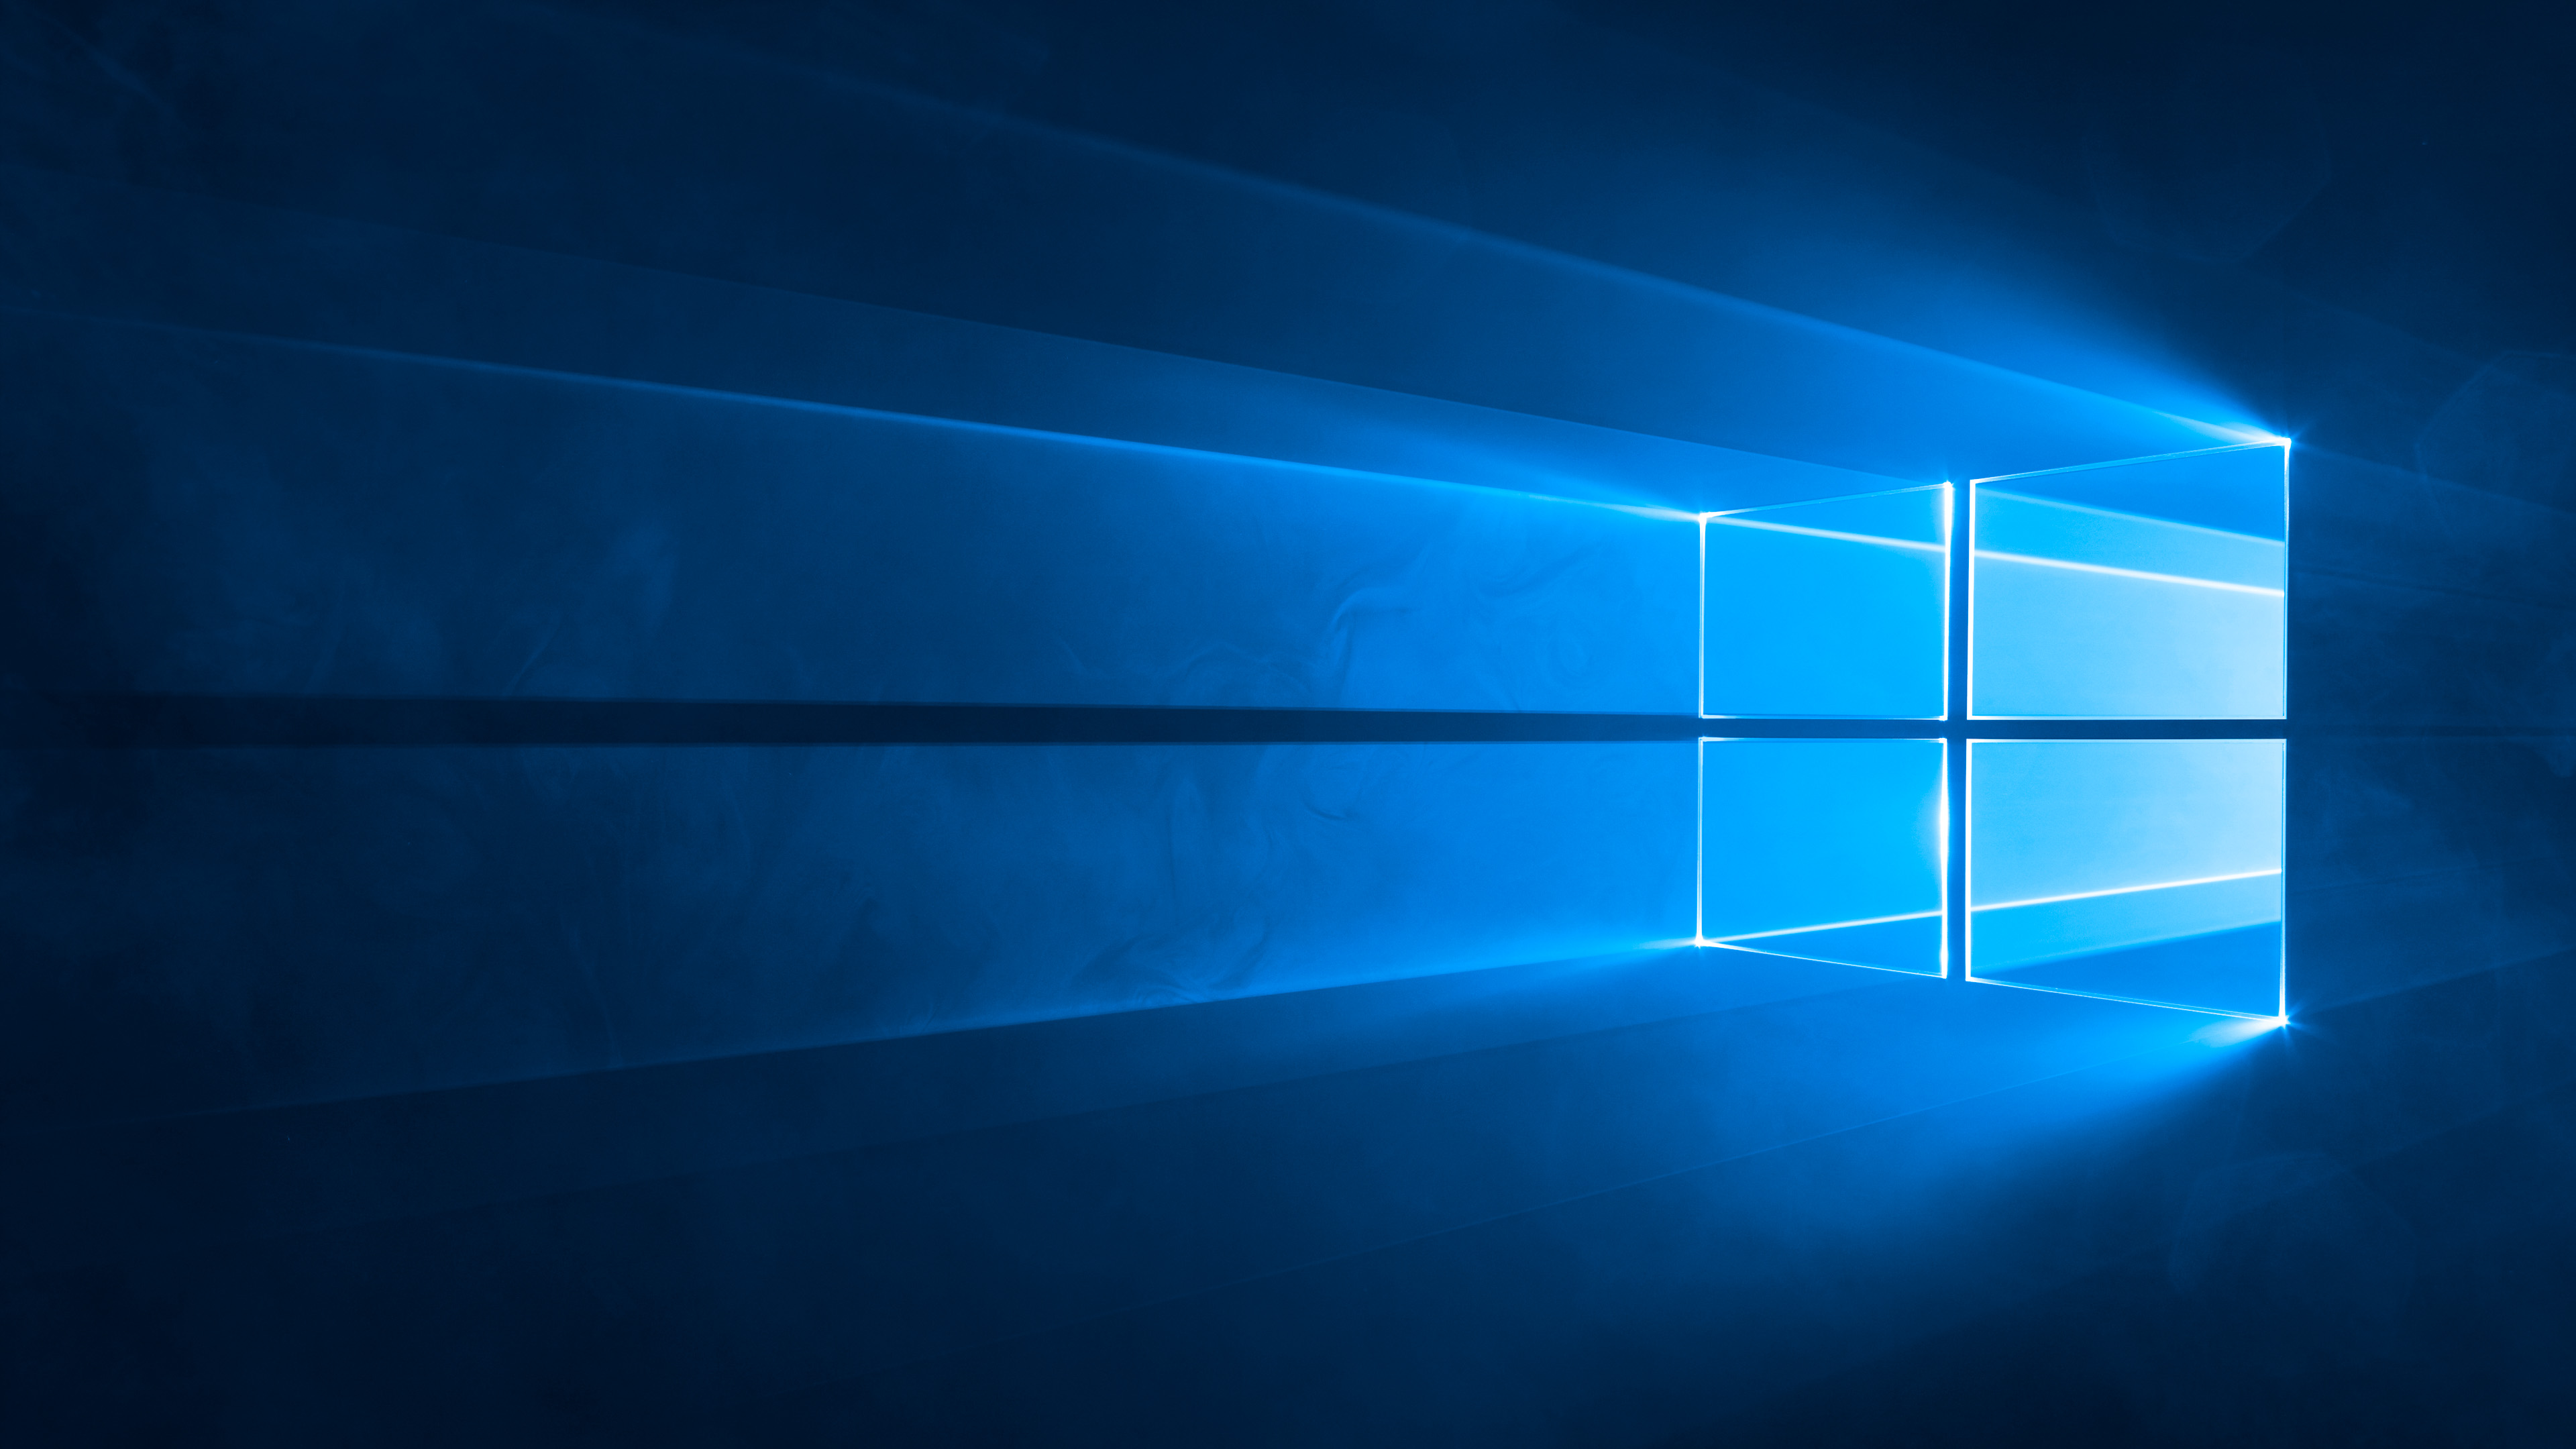 Windows 10 Build 10159 Released Start of Windows 10 Blog Series